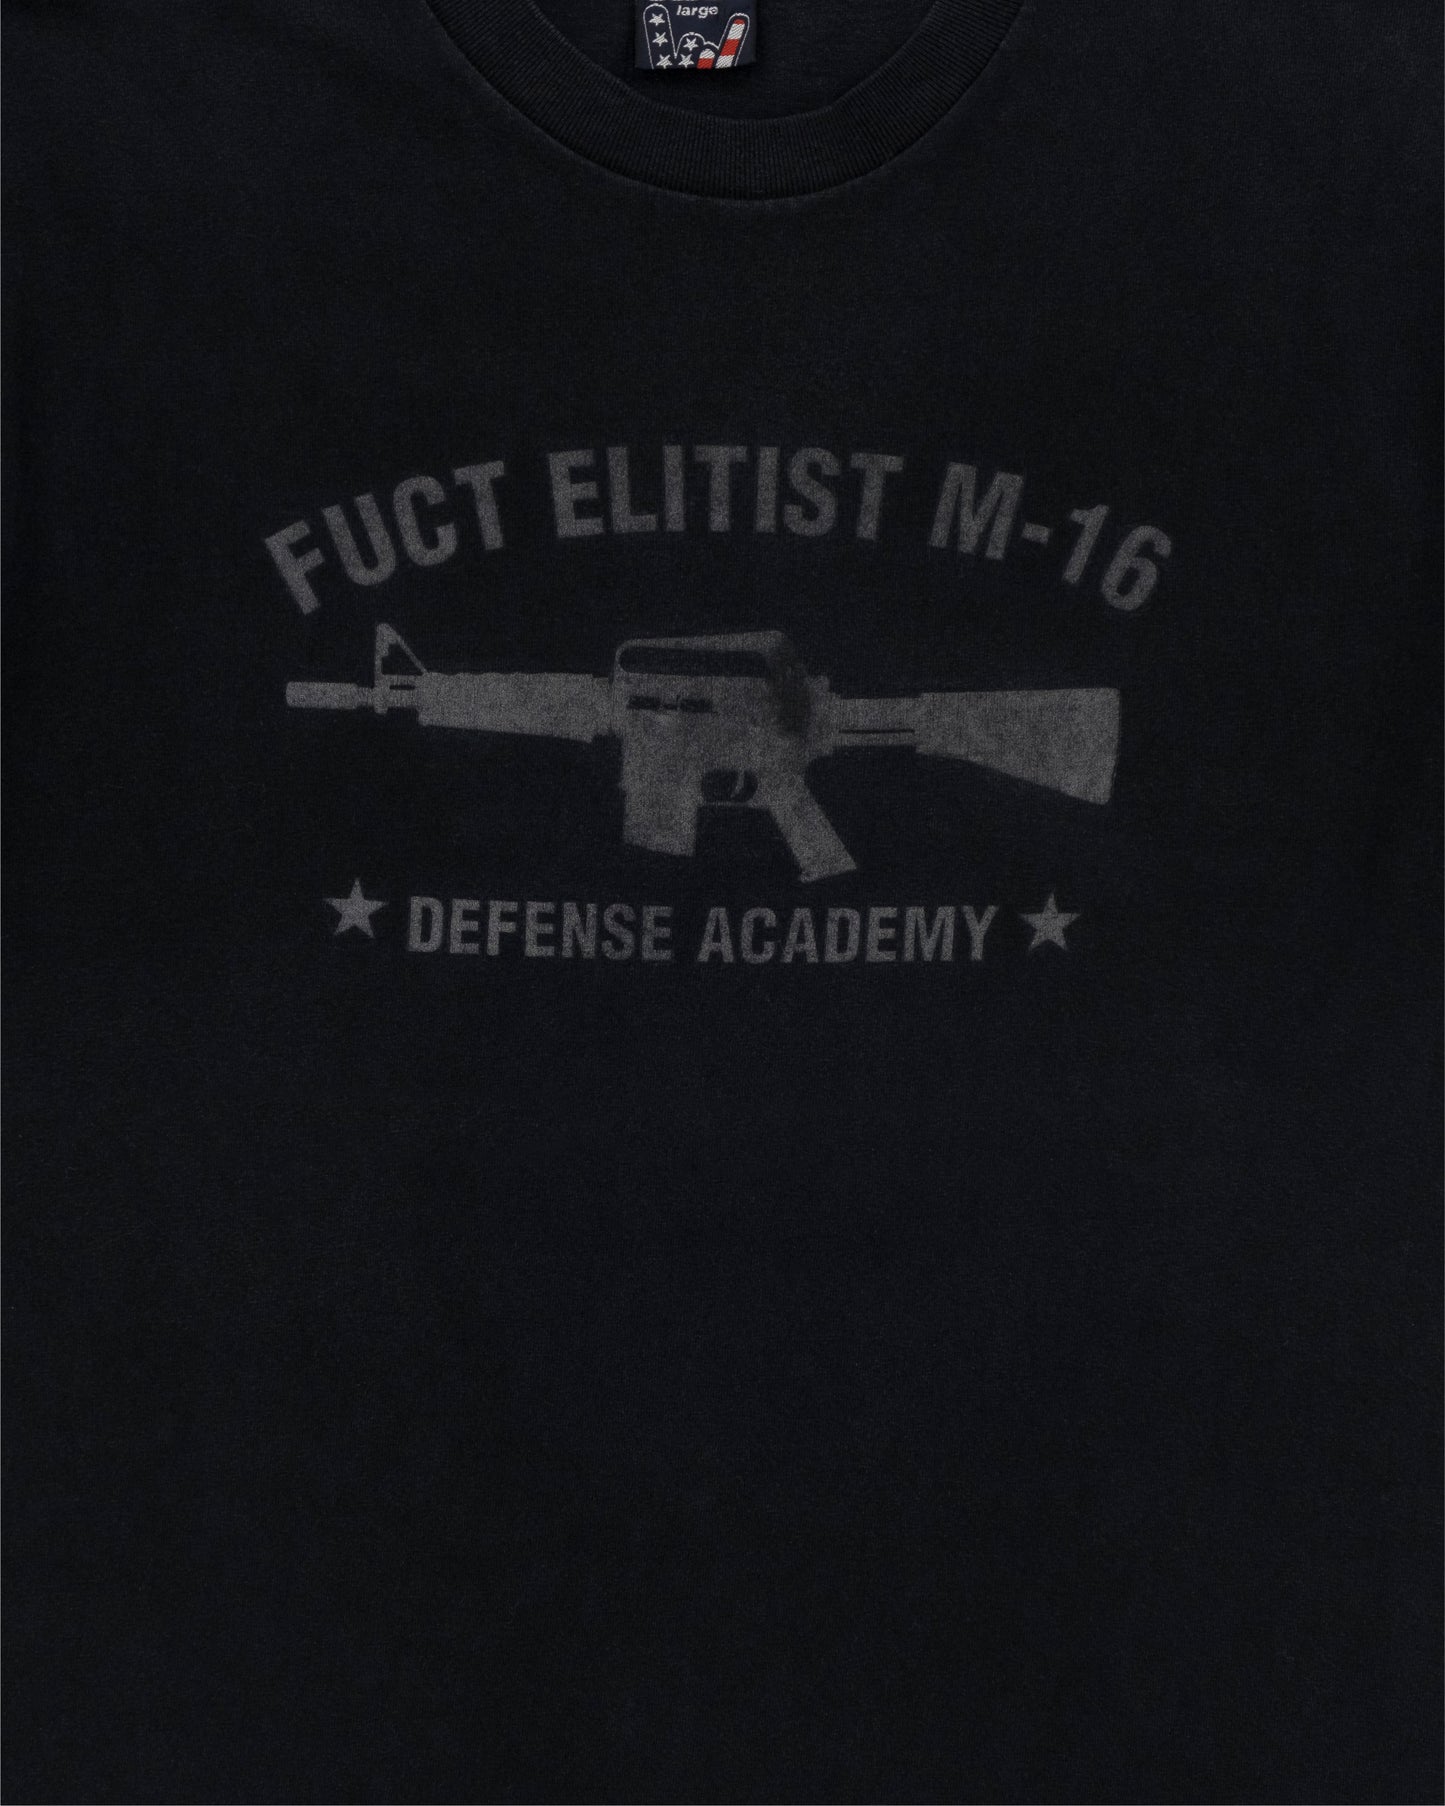 1990s FUCT Elitist M-16 T-Shirt